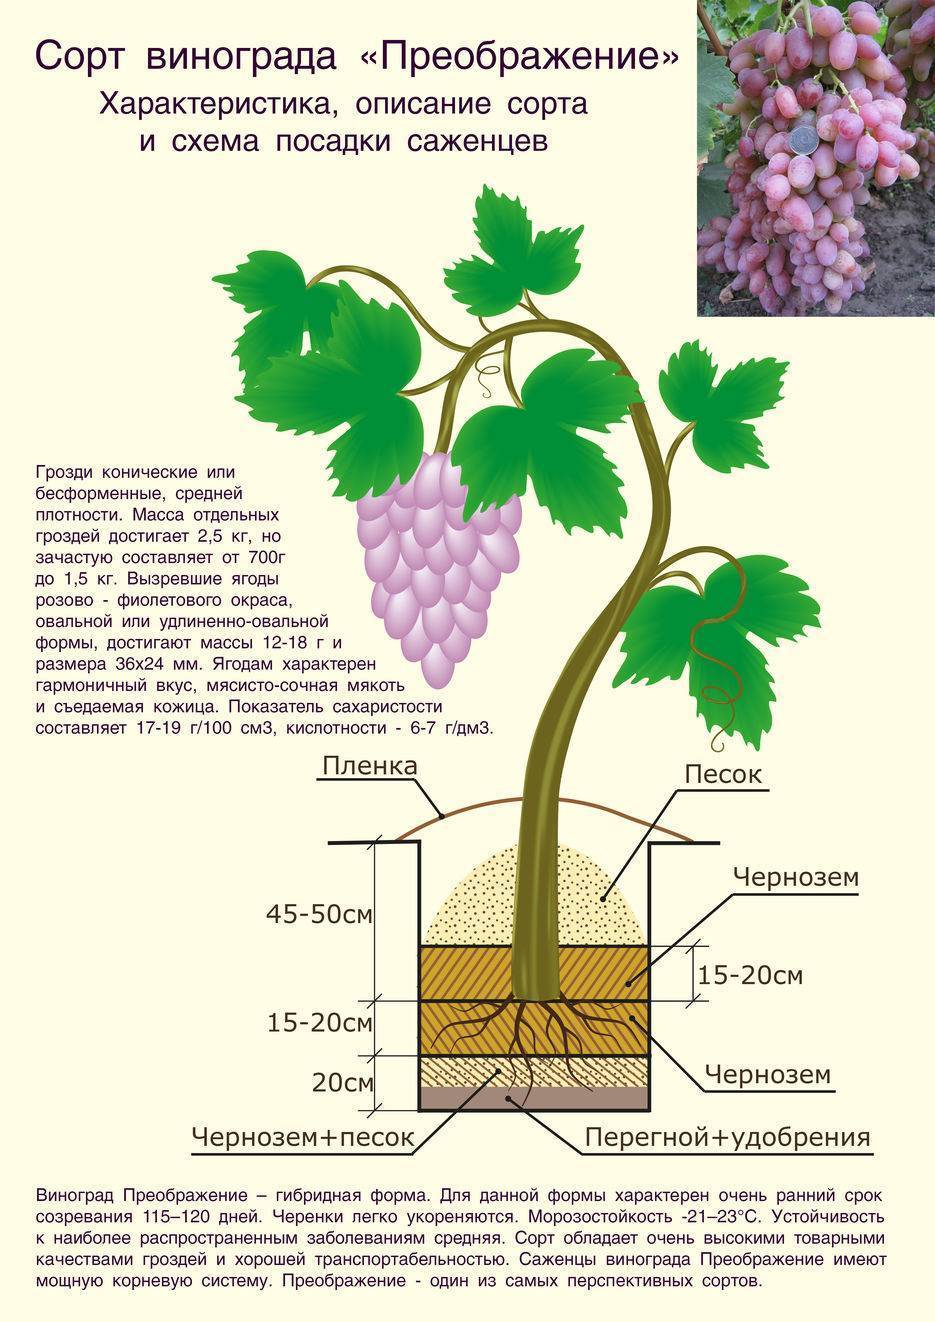 Атос — гибридная форма винограда